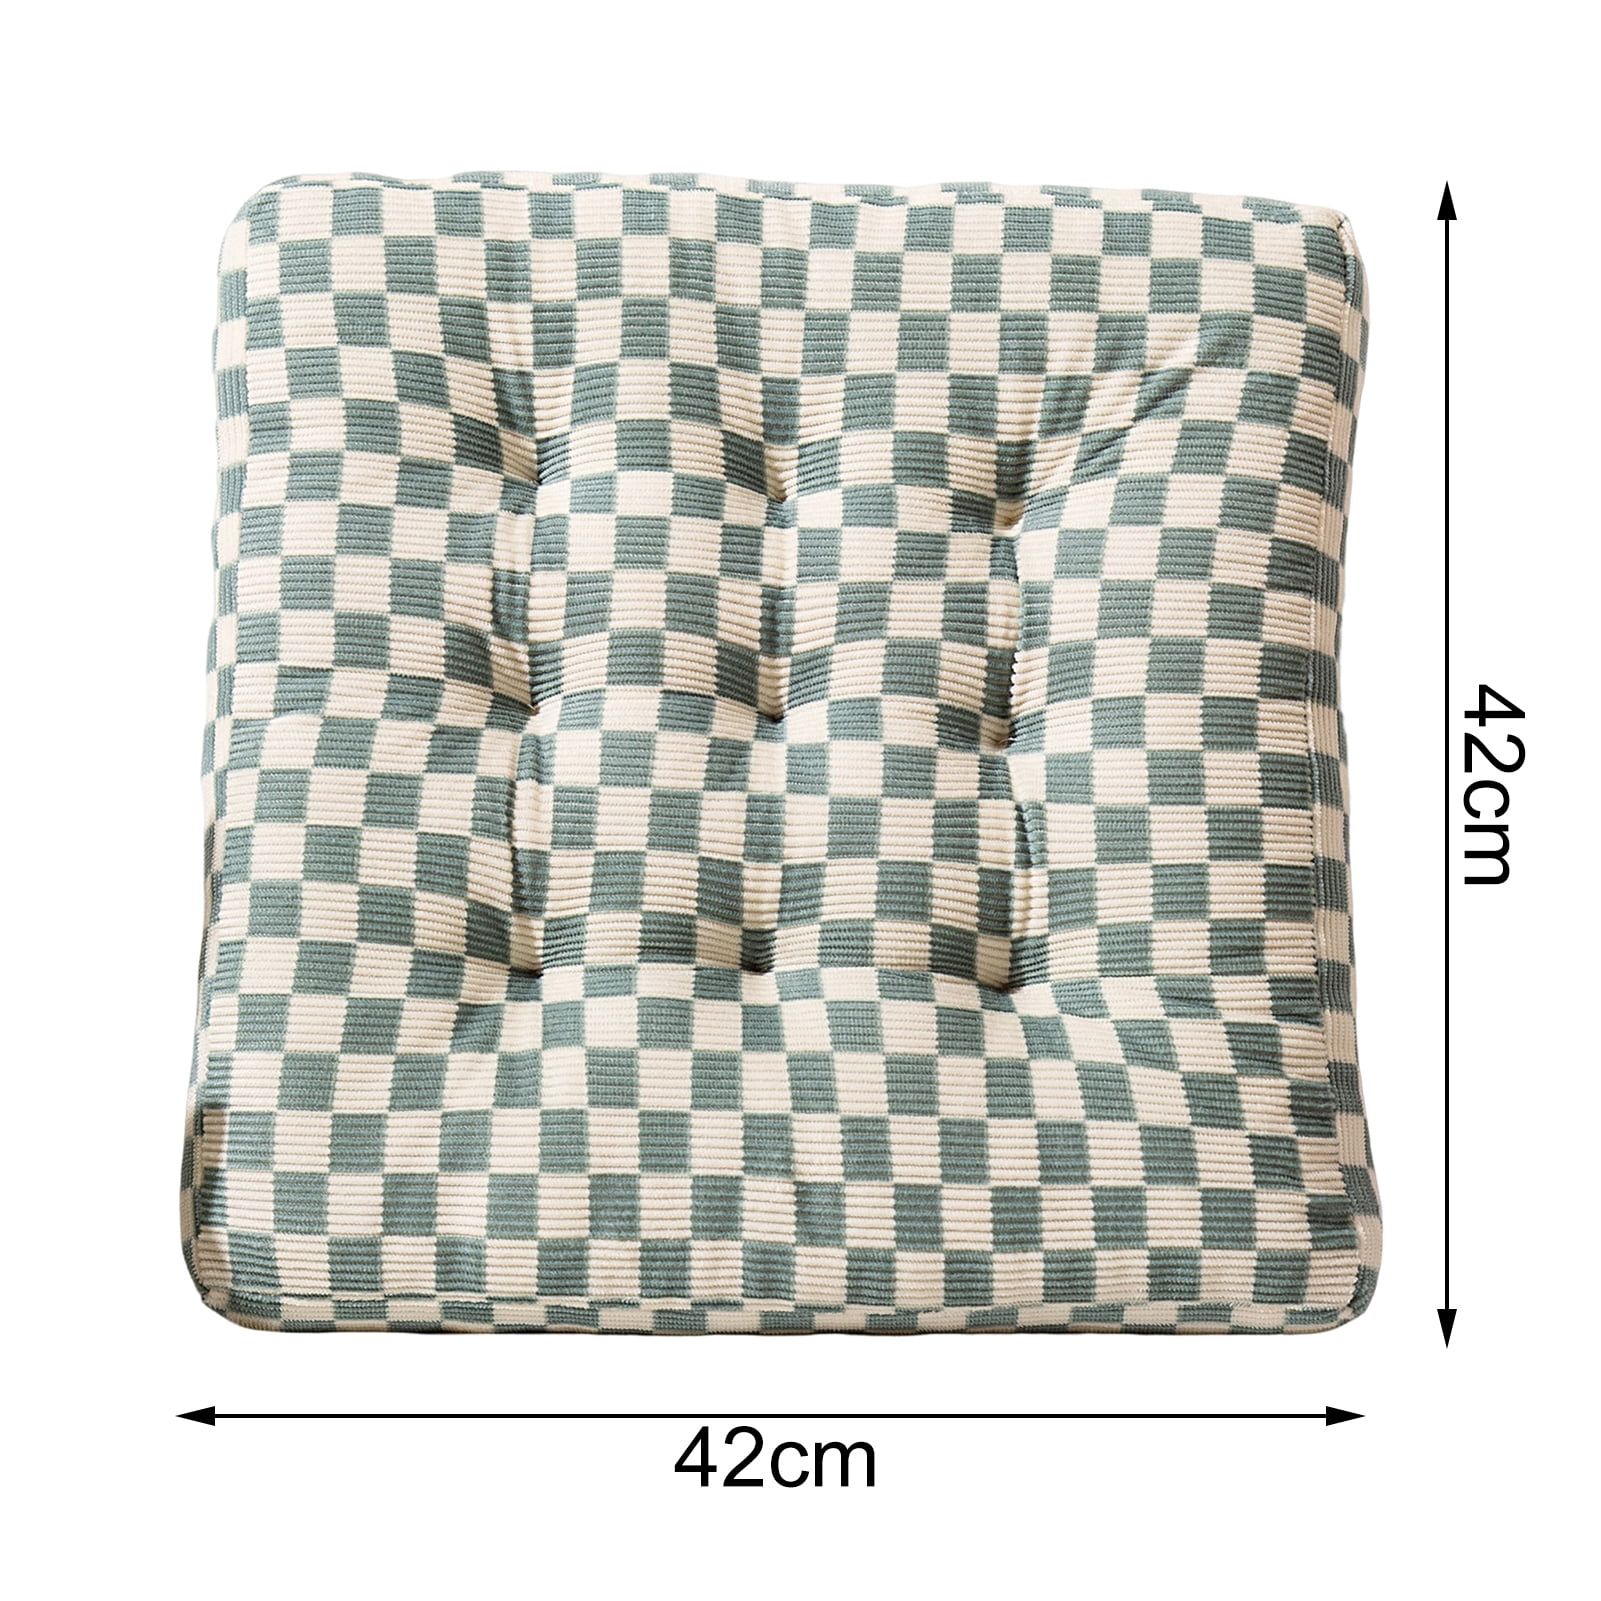 Hip Shaper Seat Cushion Multifunctional Folding Pillow - Power Day Sale